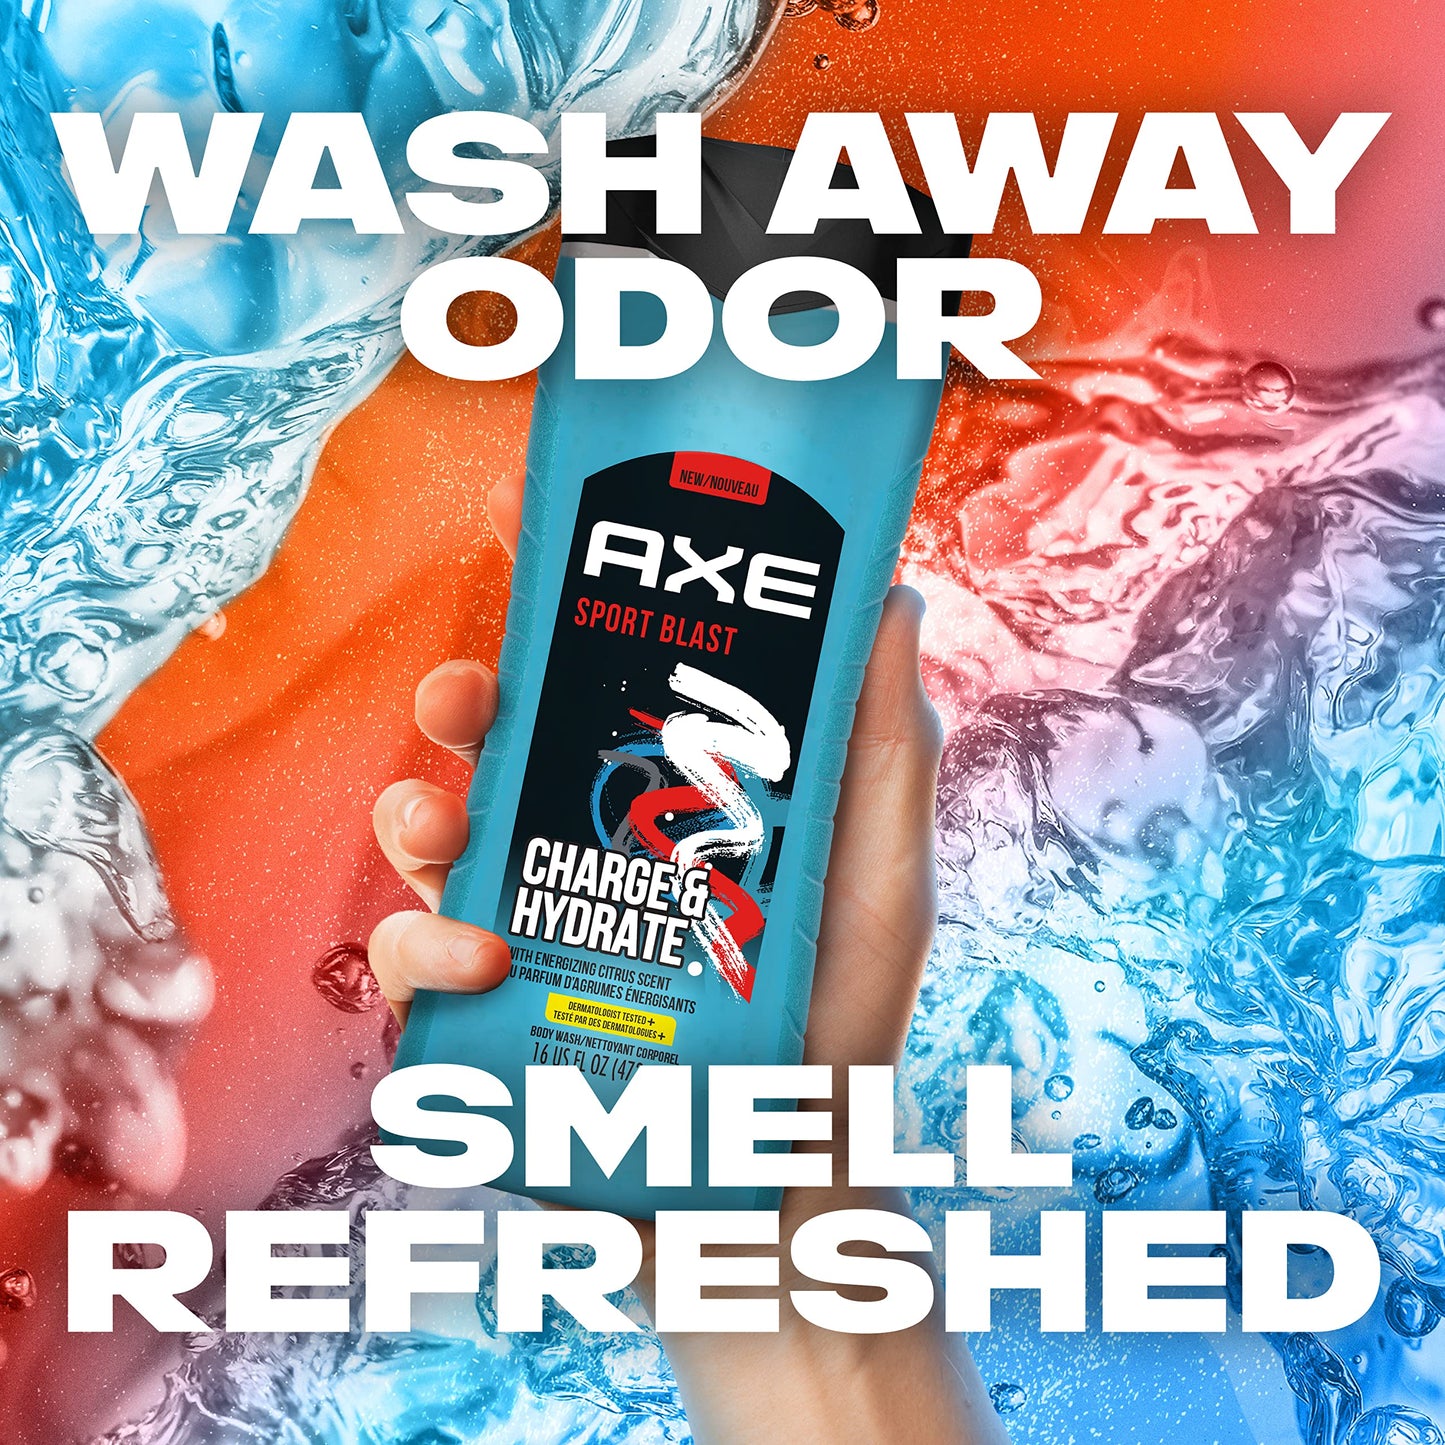 (2) Men’s AXE Sports Blast Body Face Wash Shampoo 13.5 fl oz ea